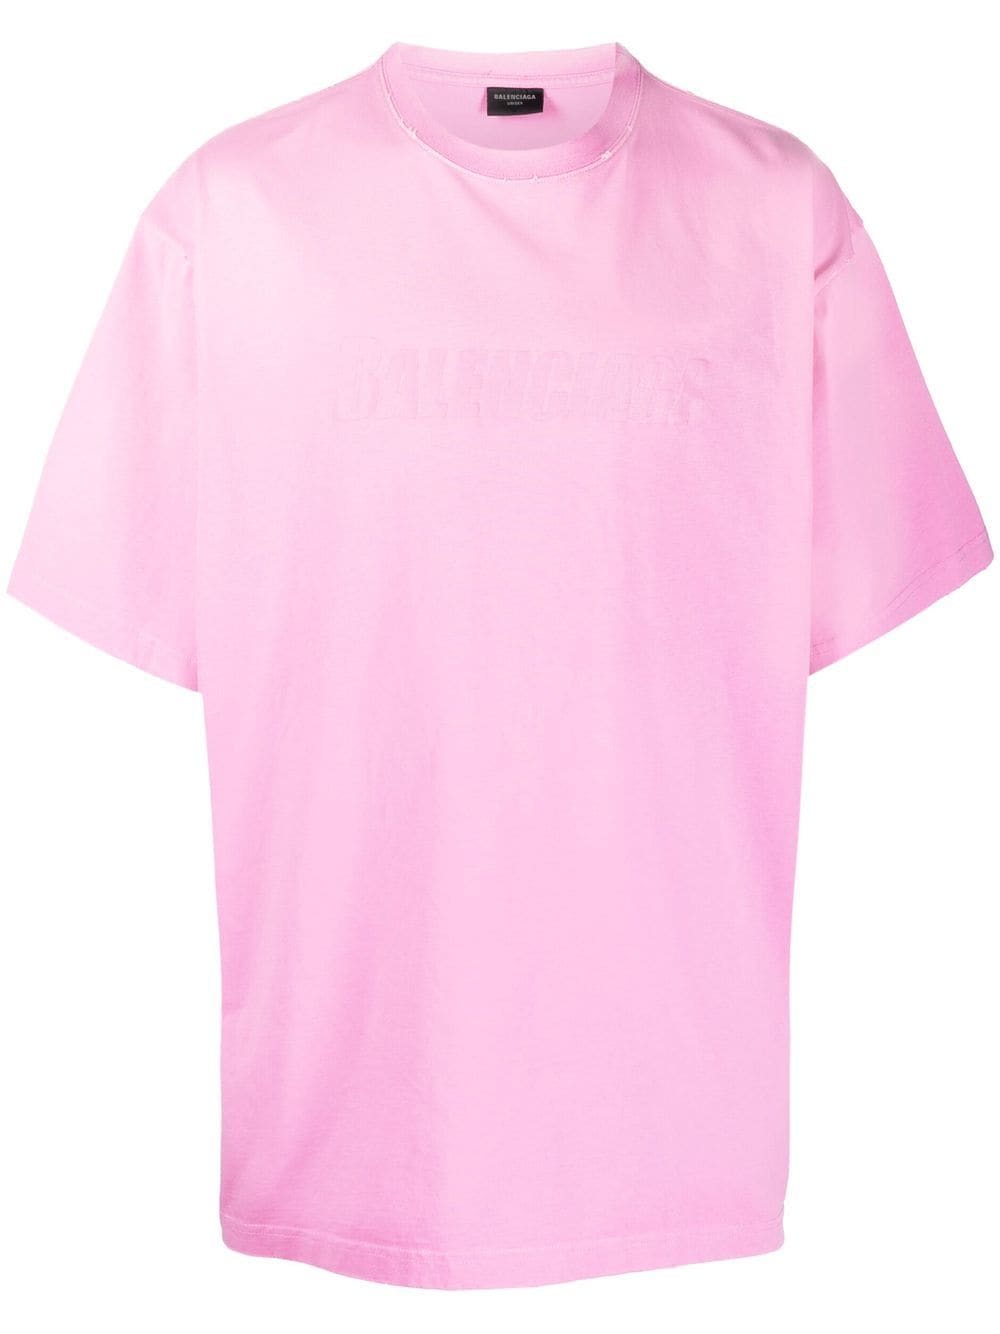 Balenciaga T-shirt met logoprint - Roze